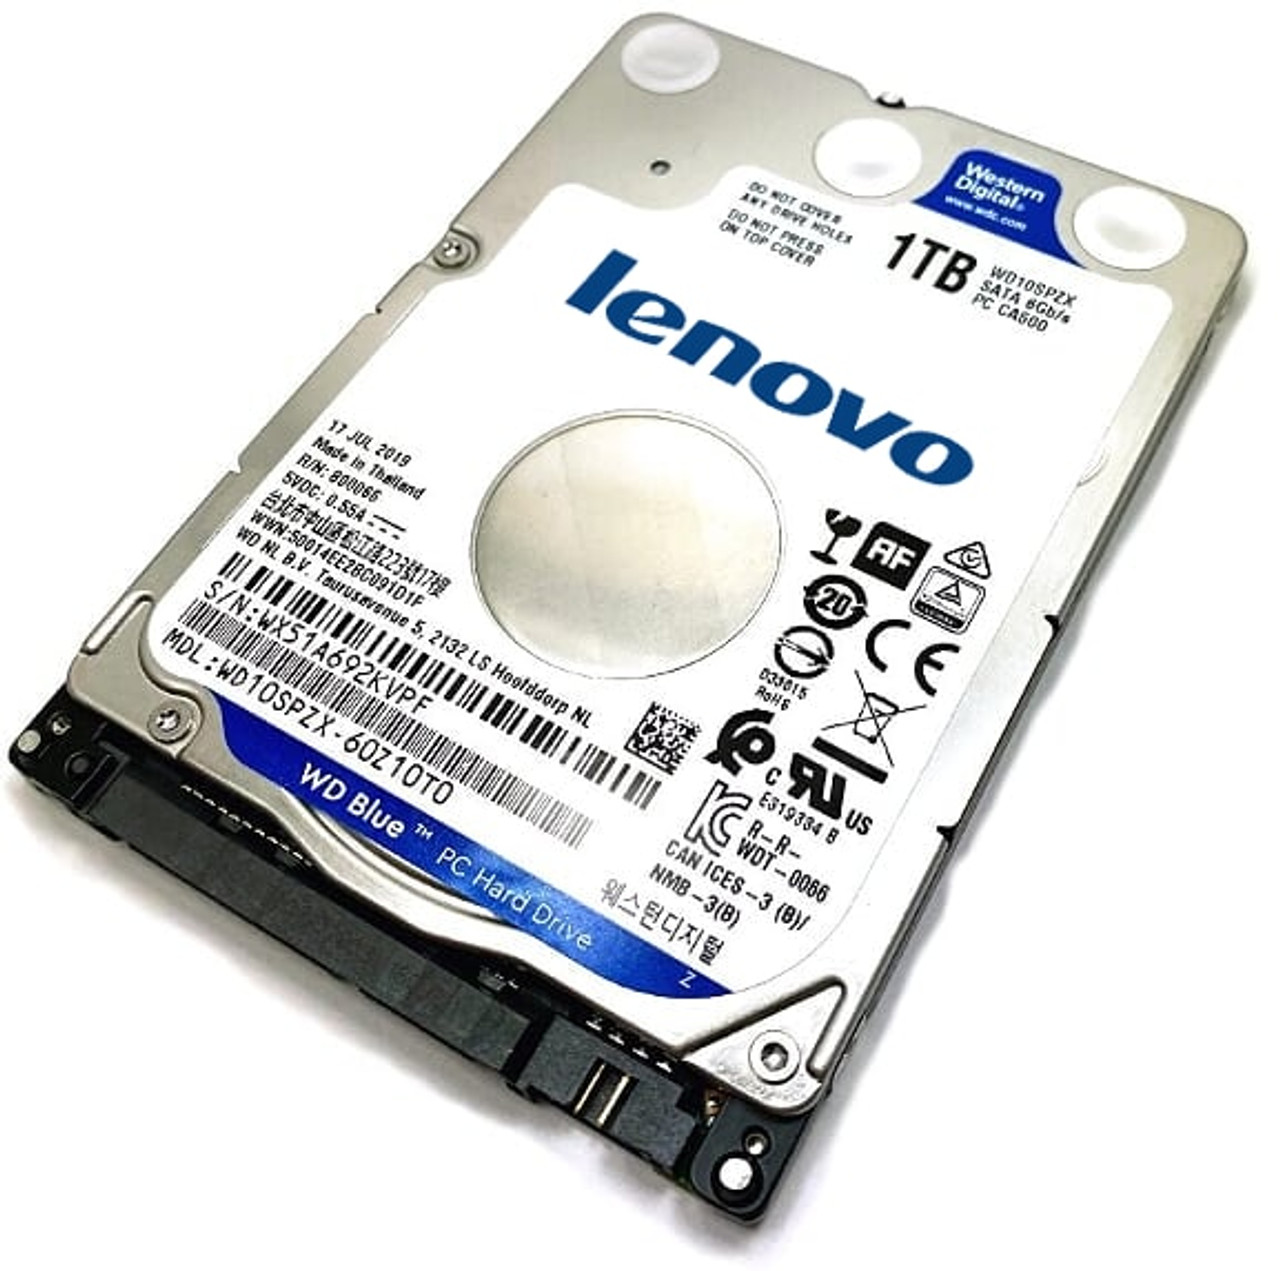 Lenovo Ideapad U330P Laptop Hard Drive Replacement LaptopHDS.com